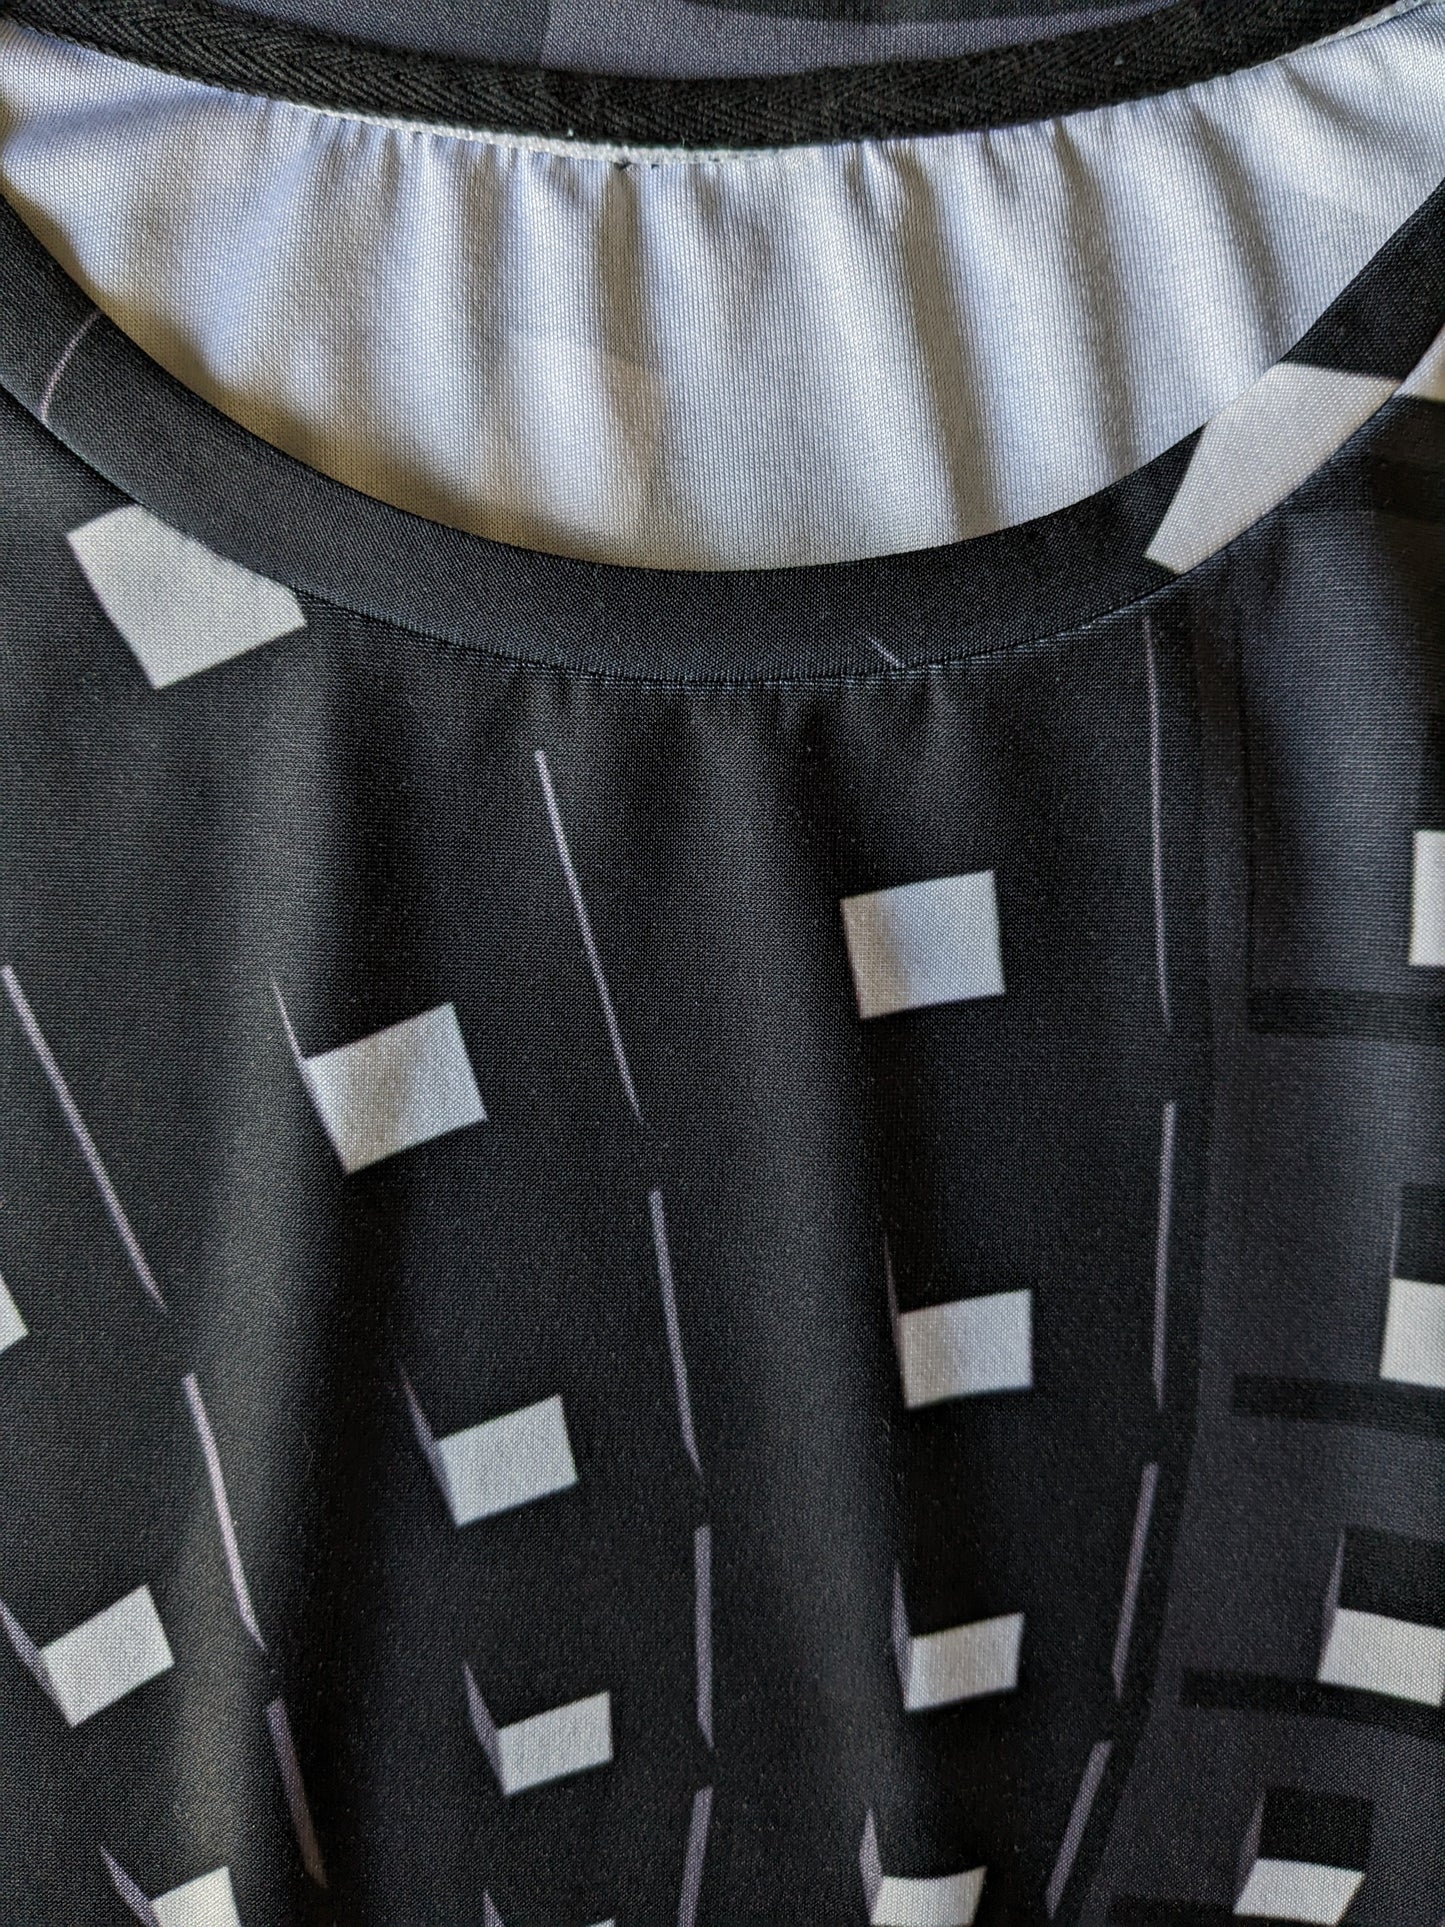 Geometric print shirt. Zwart Grijs Wit gekleurd. Maat M. stretch.